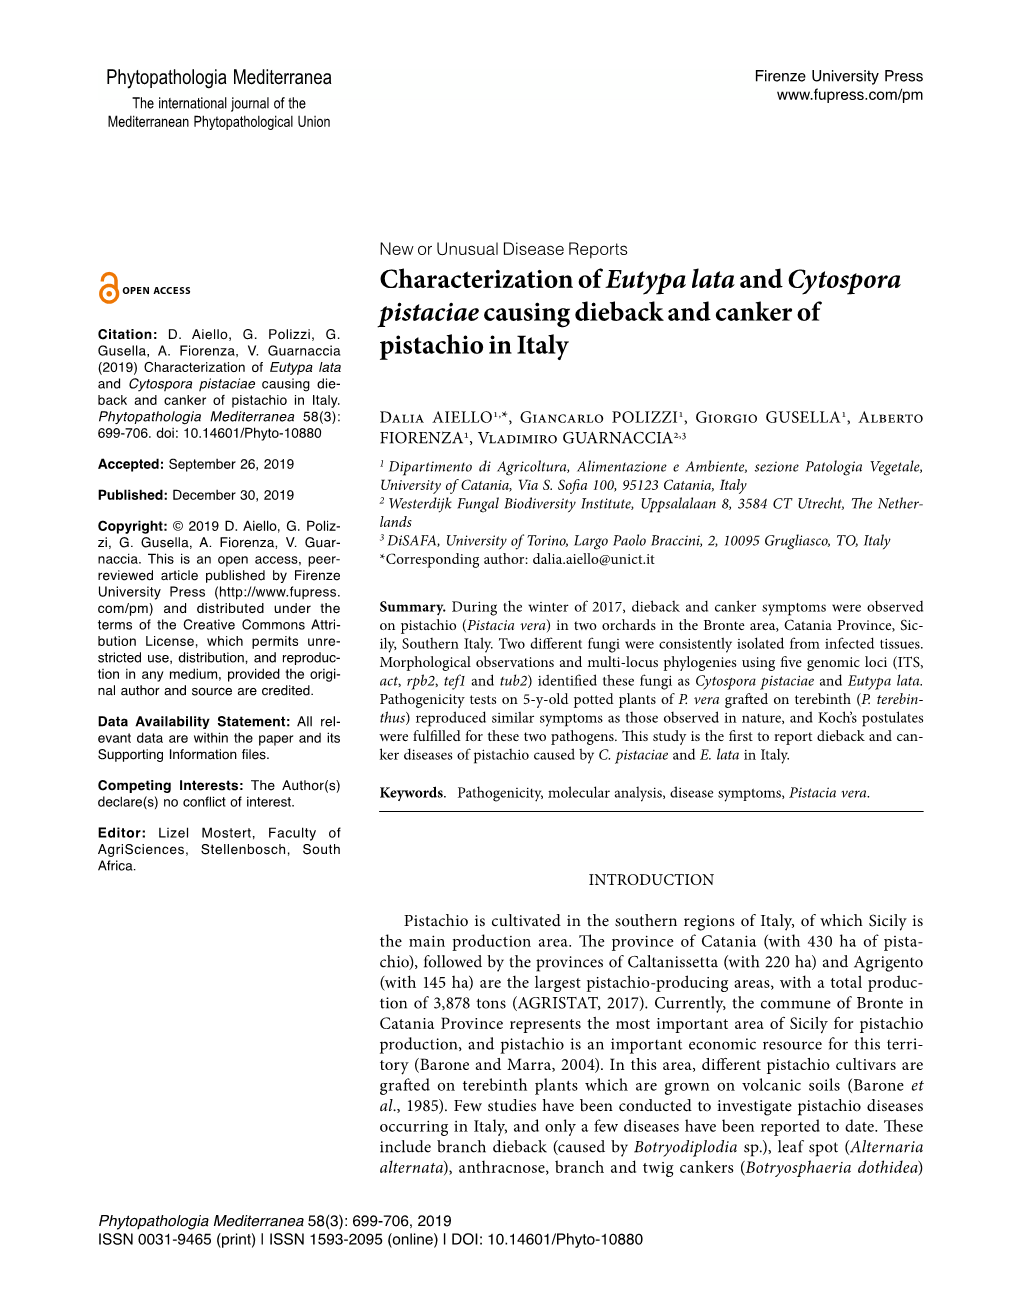 Characterization of Eutypa Lataand Cytospora Pistaciaecausing